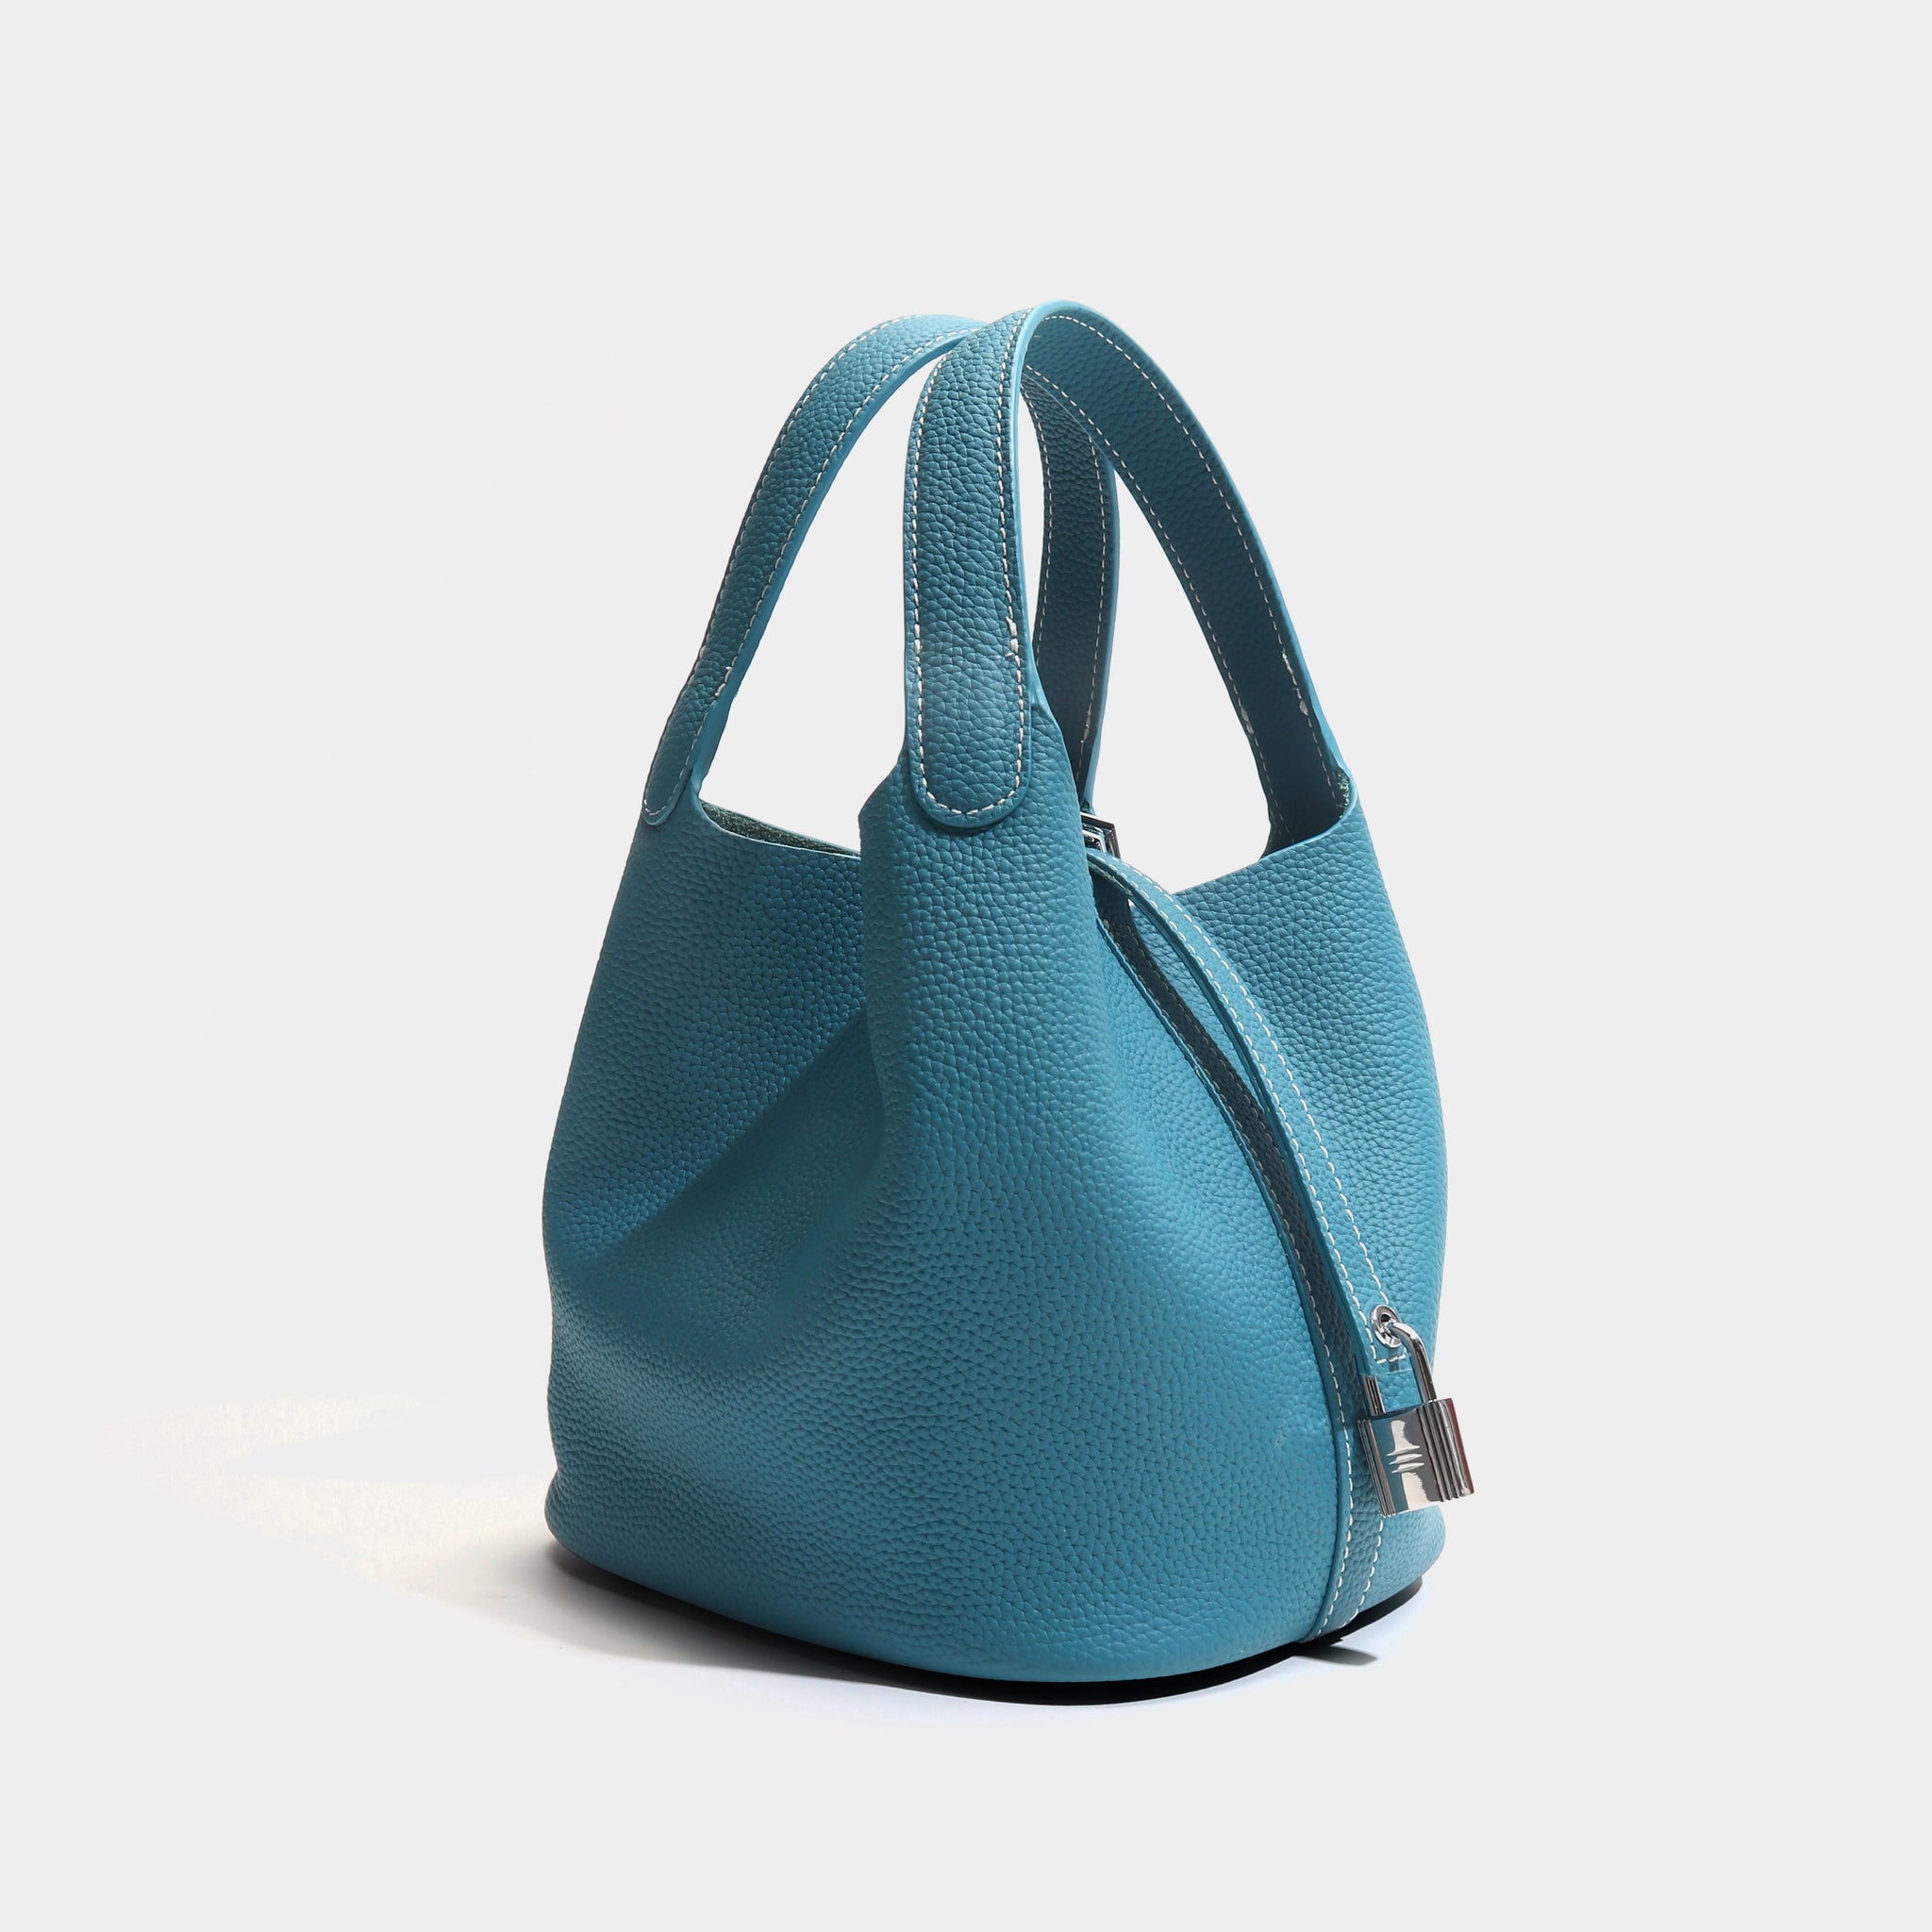 Purses & Handbags, made lightweight so shoulders are no longer tired ...